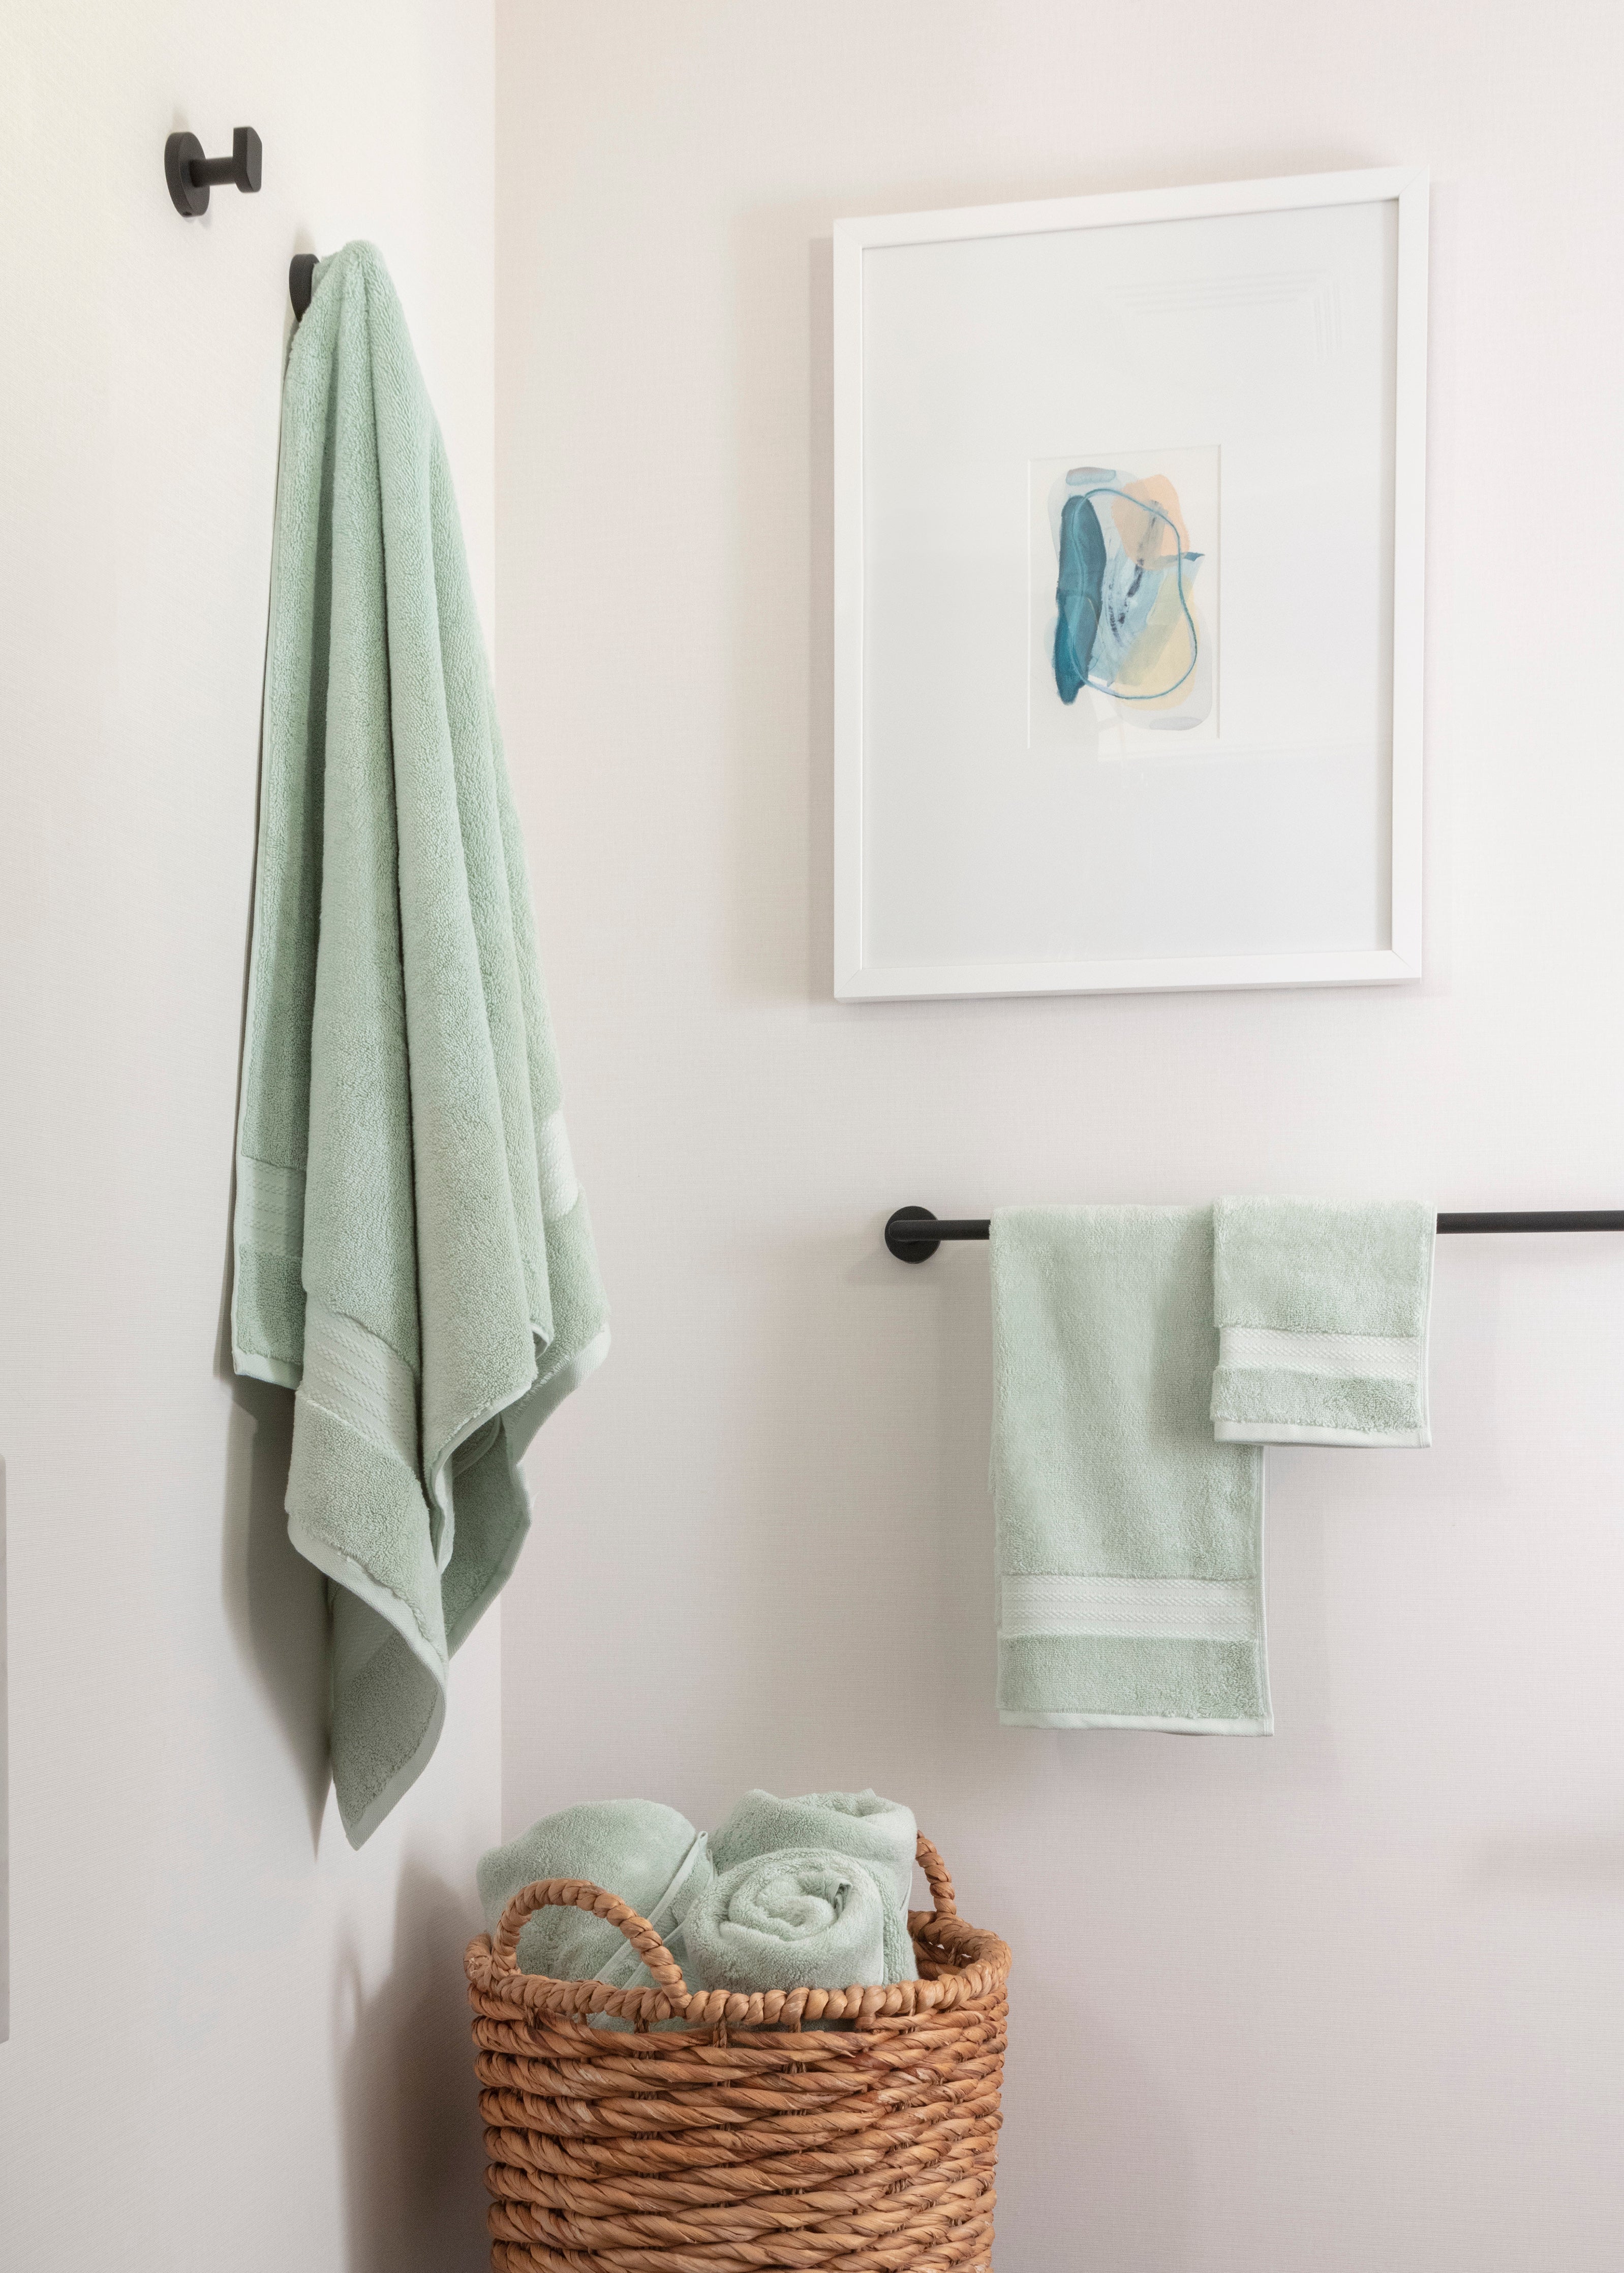 Ash Antimicrobial Organic Cotton Bath Towels